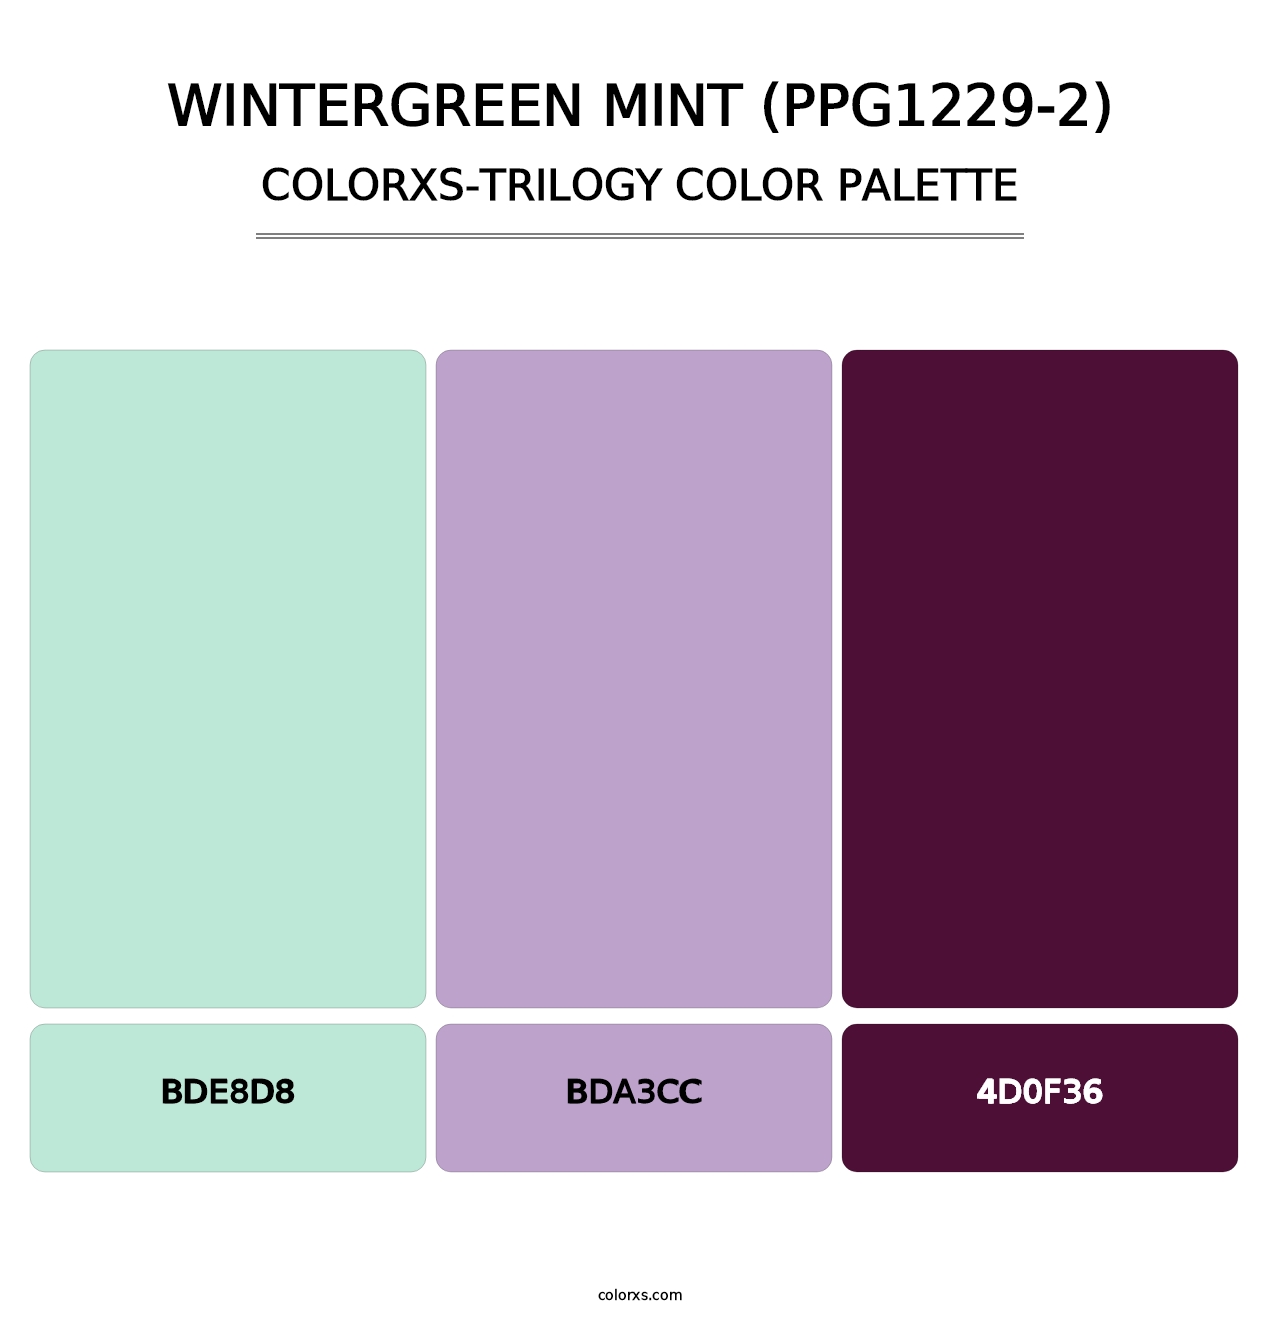 Wintergreen Mint (PPG1229-2) - Colorxs Trilogy Palette